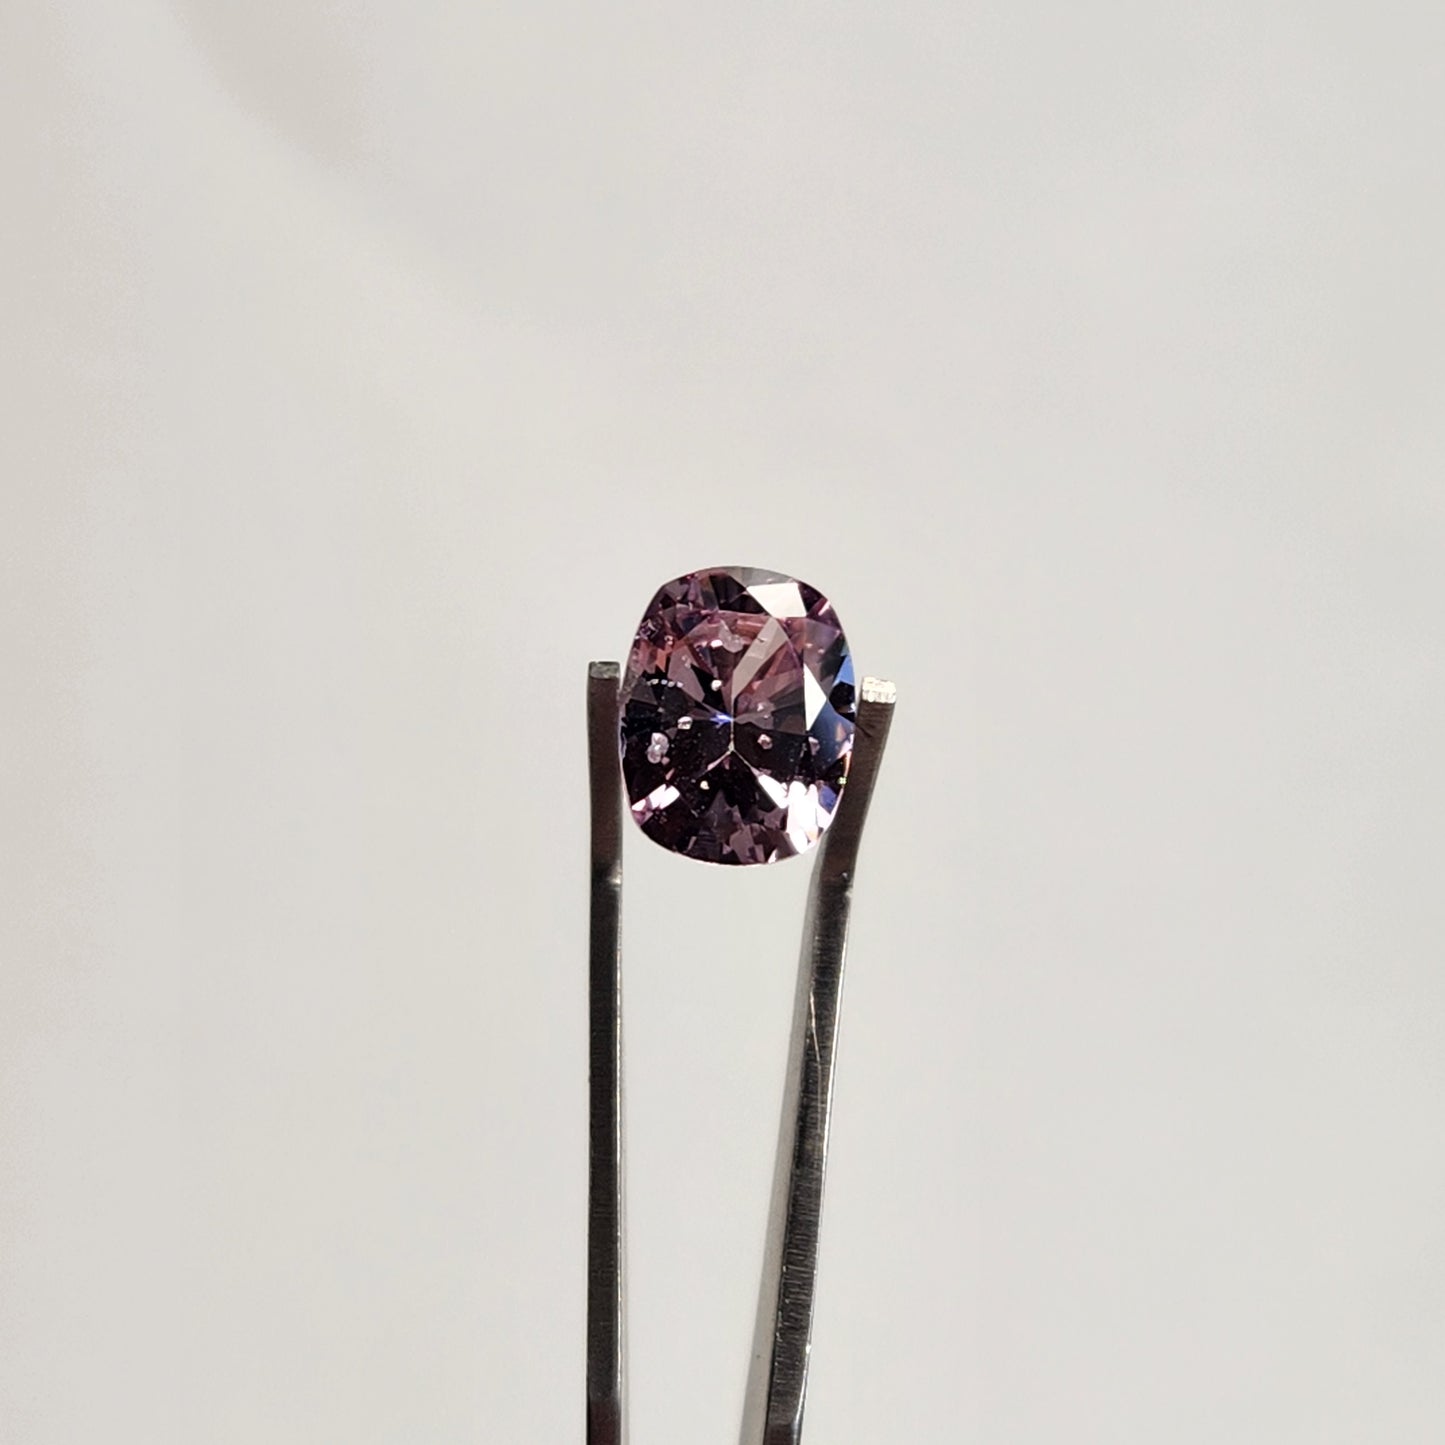 1.35 ct Pink Sapphire w/ Unique Inclusions